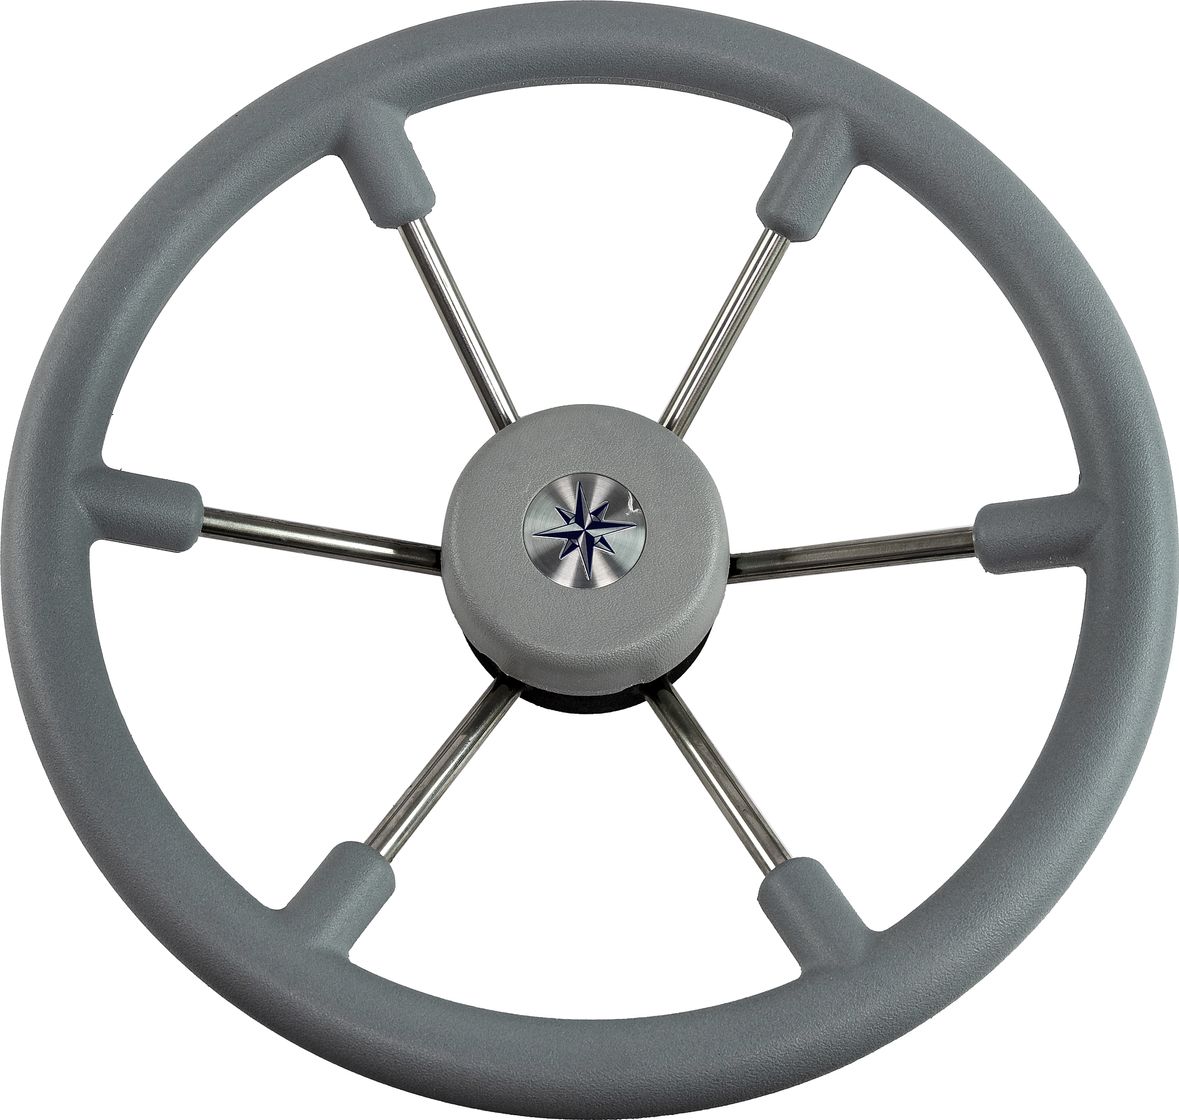 Рулевое колесо LEADER TANEGUM серый обод серебряные спицы д. 360 мм VN7360-03 рулевое колесо leader plast обод серебряные спицы д 360 мм vn8360 01